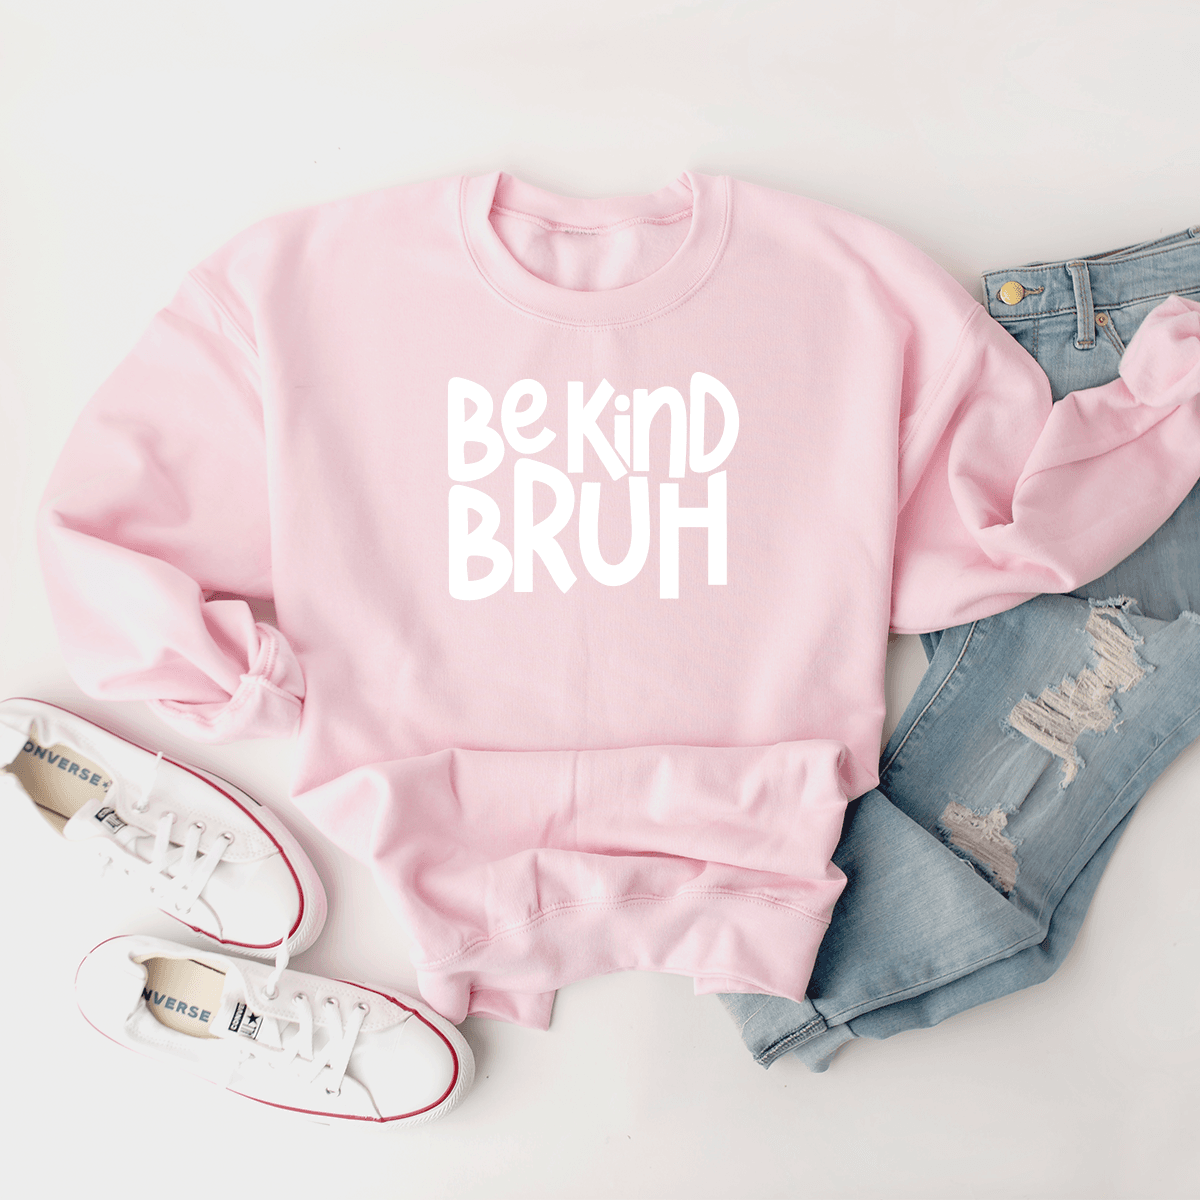 Be Kind (Bruh) - Sweatshirt